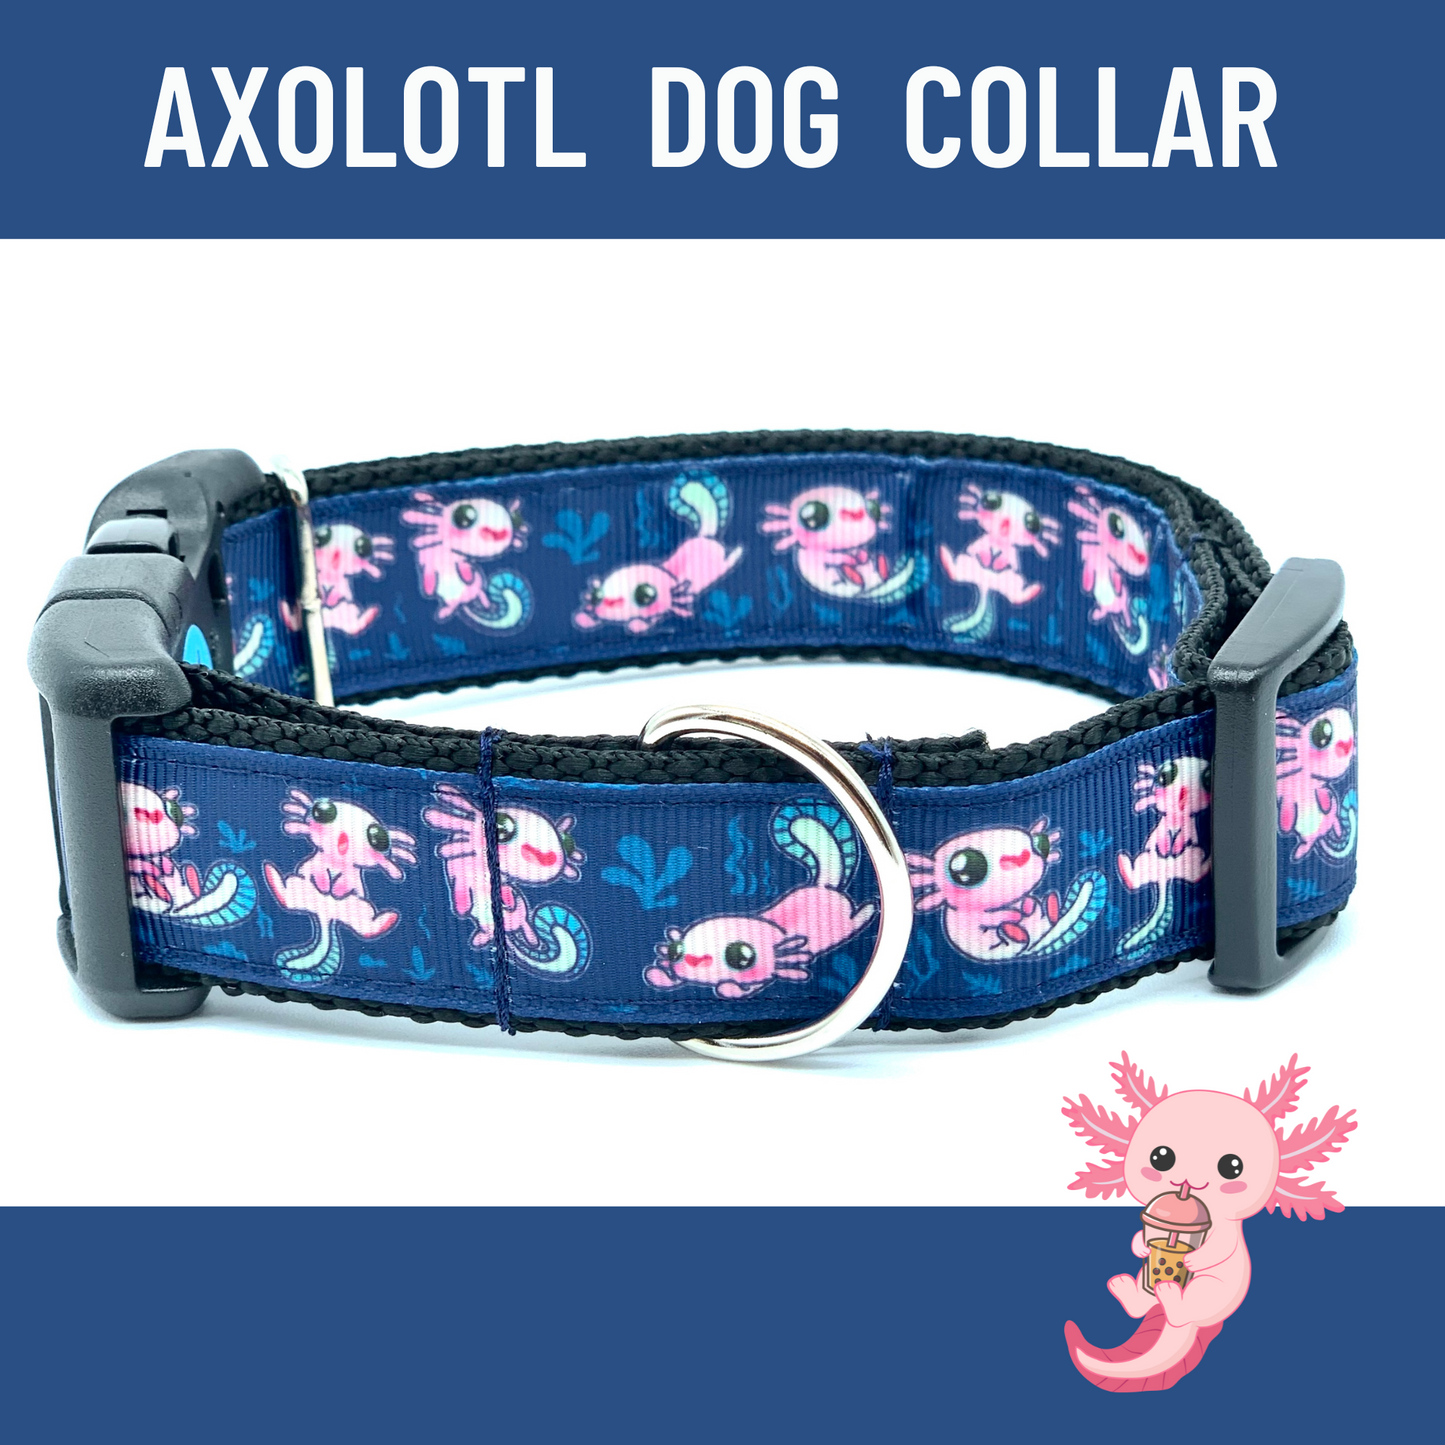 Axolotl Dog Collar